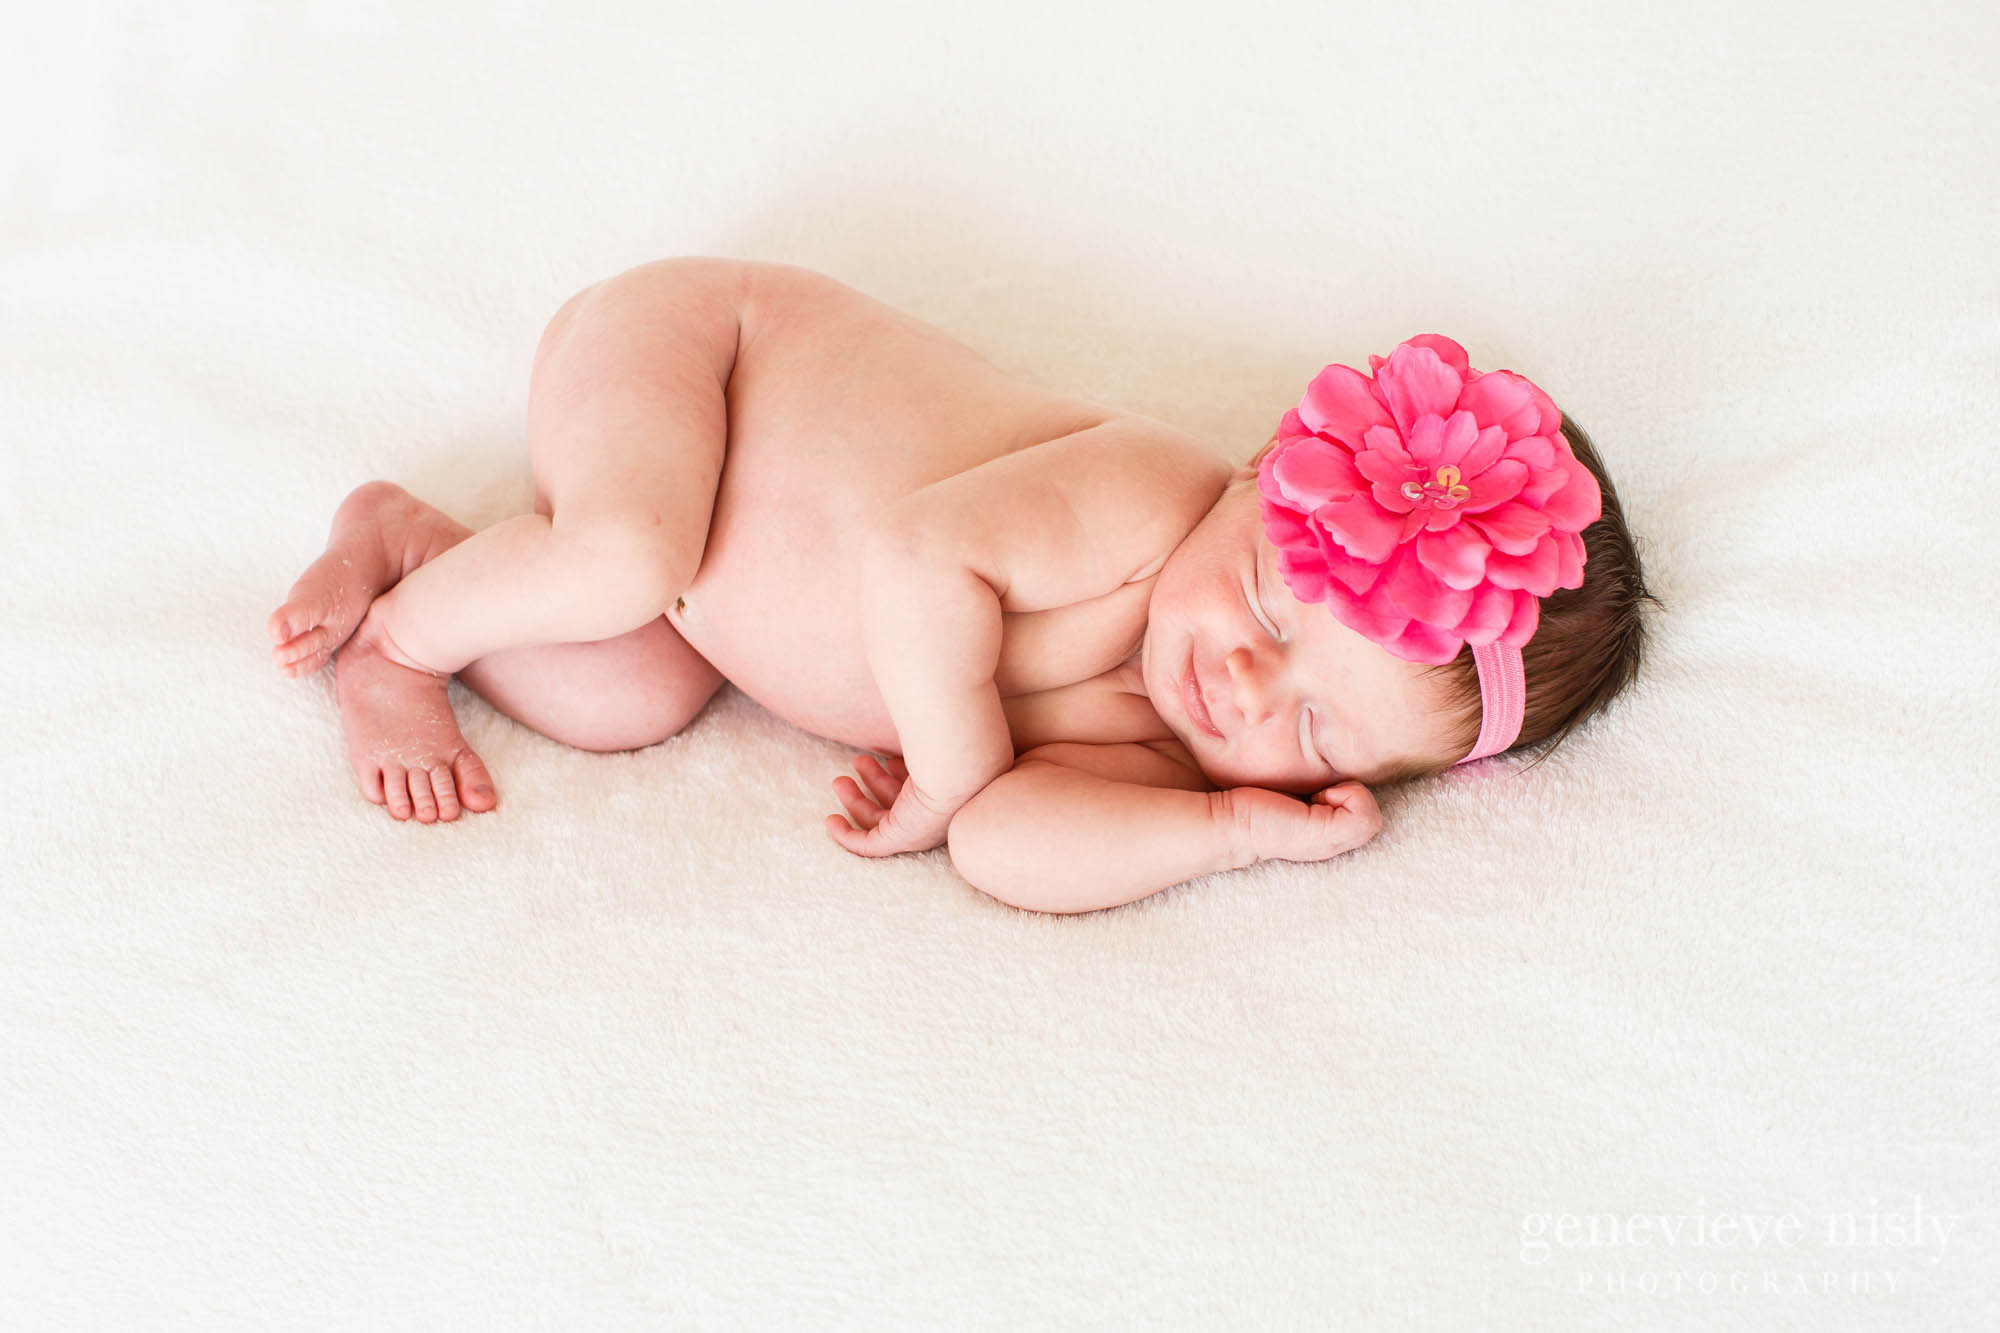  Baby, Copyright Genevieve Nisly Photography, Family, Green, Ohio, Portraits